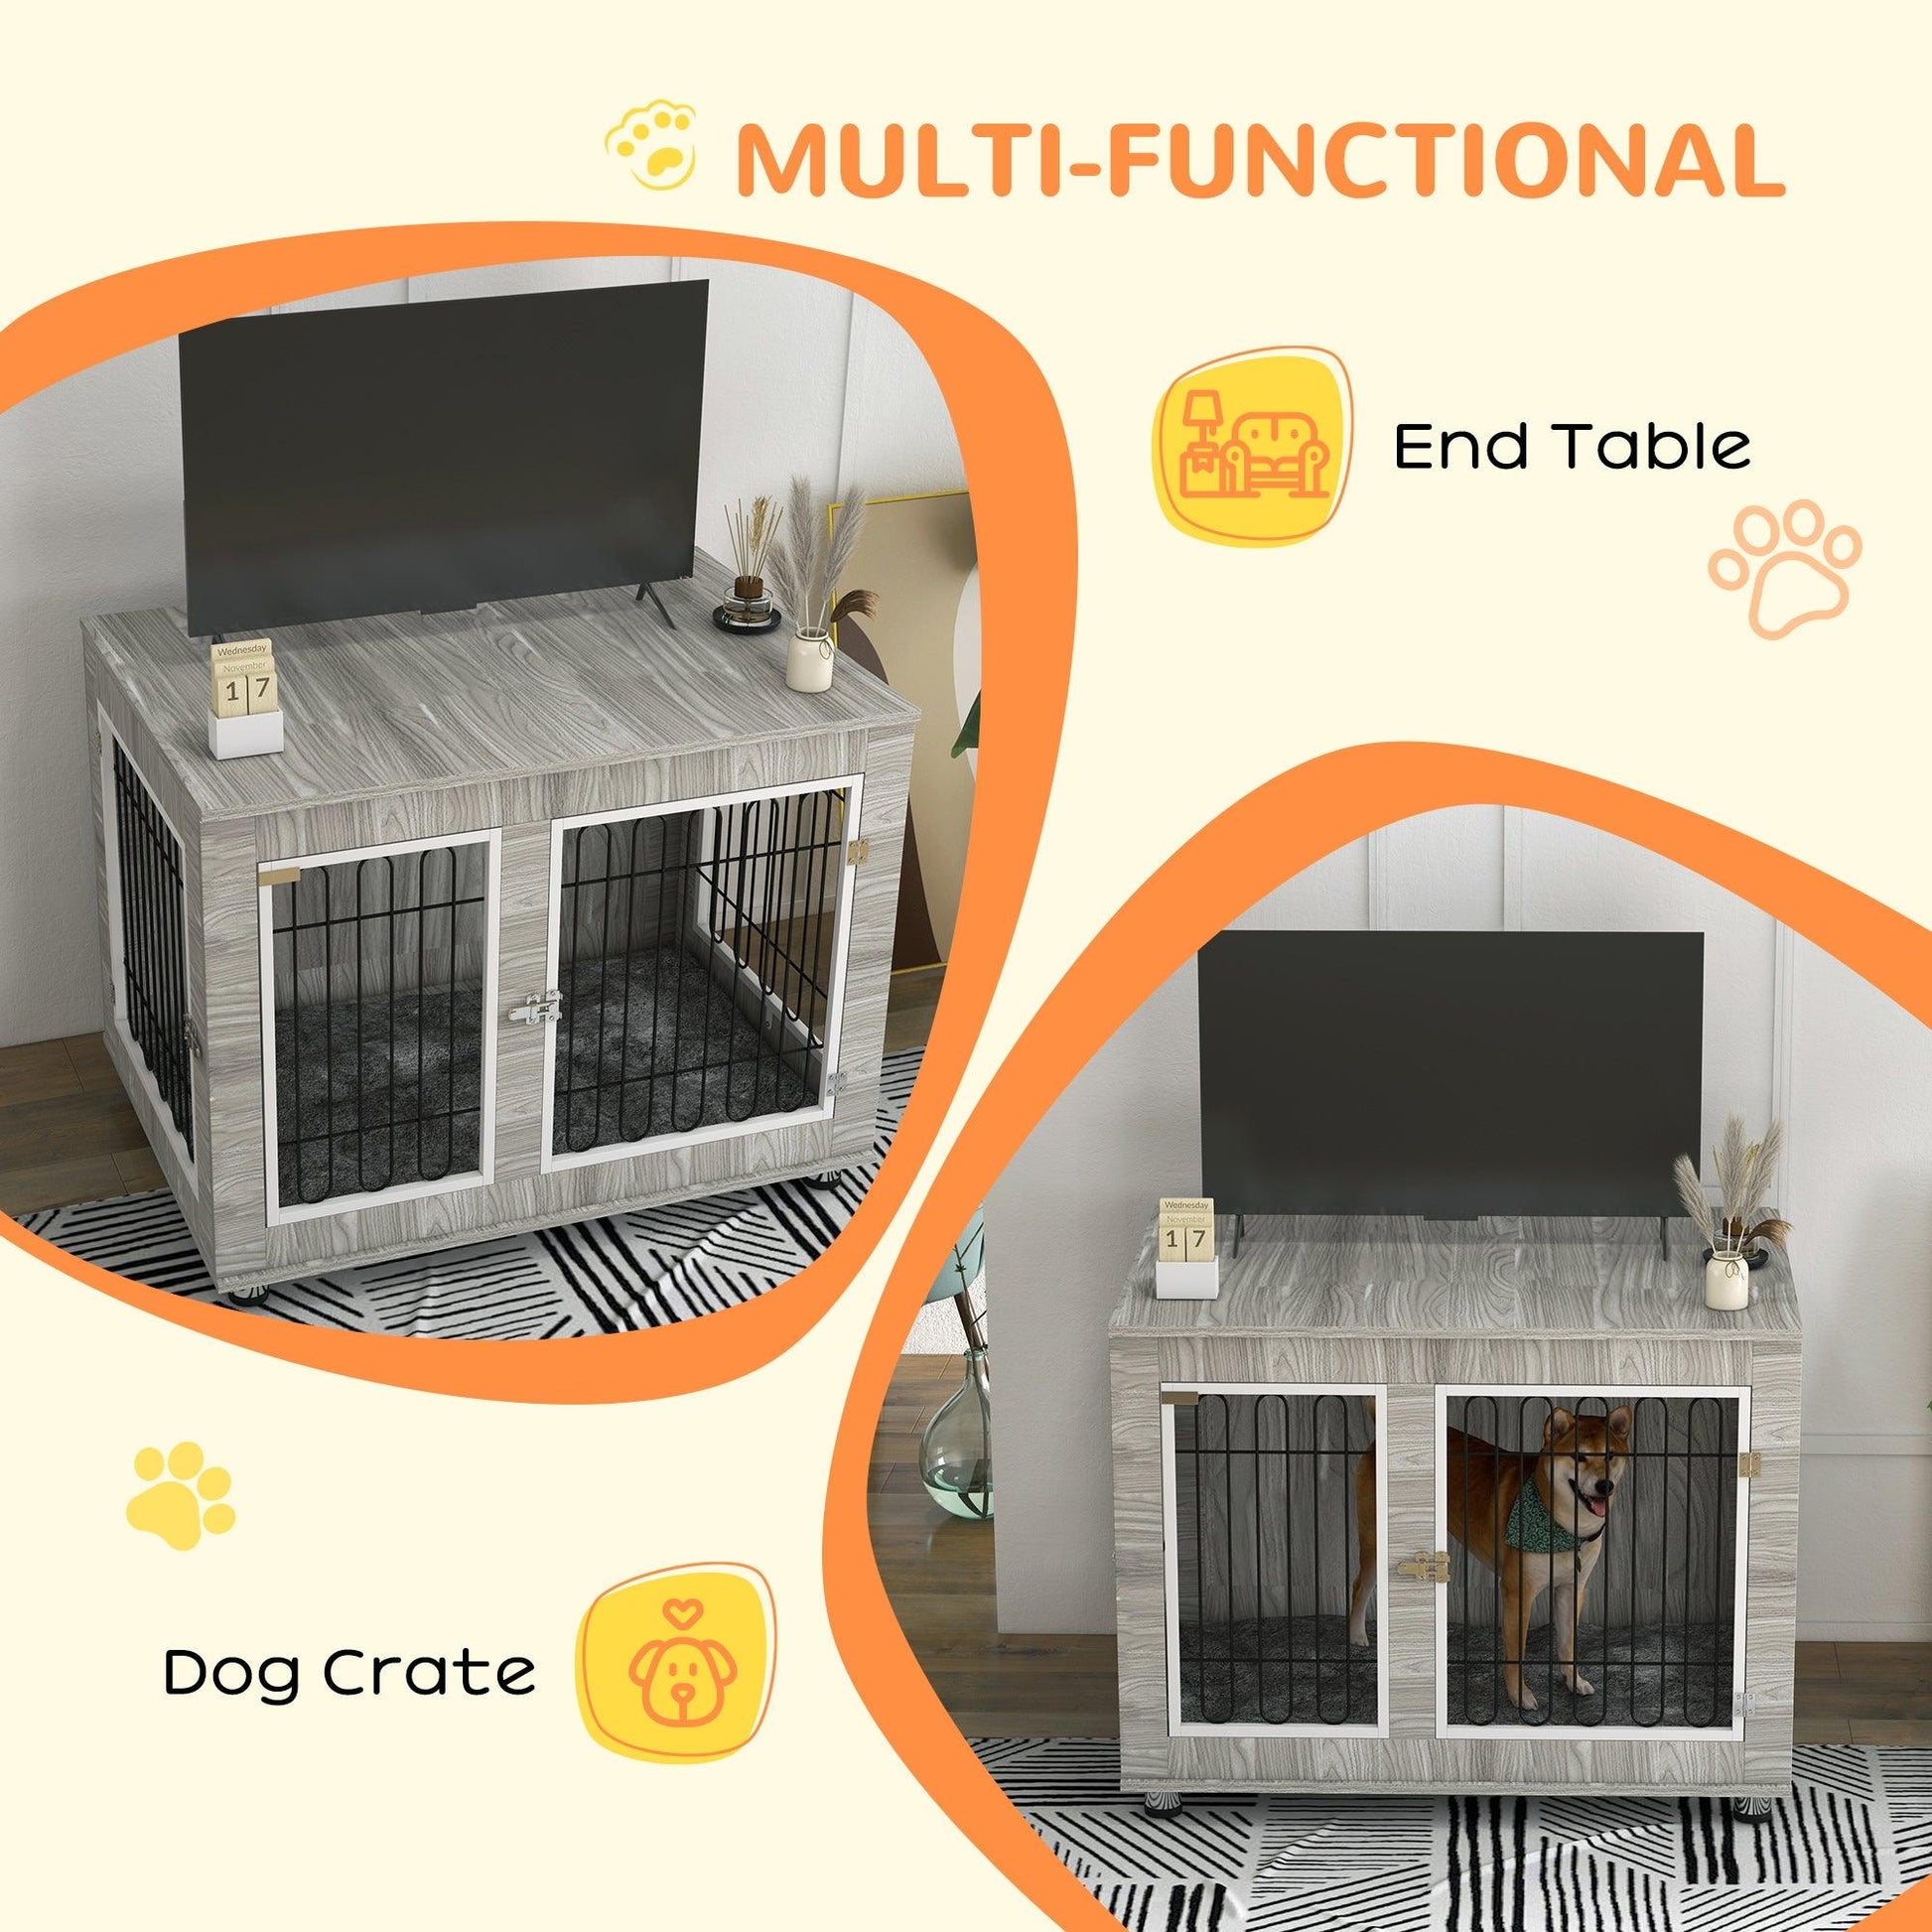 PawHut Indoor Dog Kennel for Large Dogs, Double Door, Grey - ALL4U RETAILER LTD